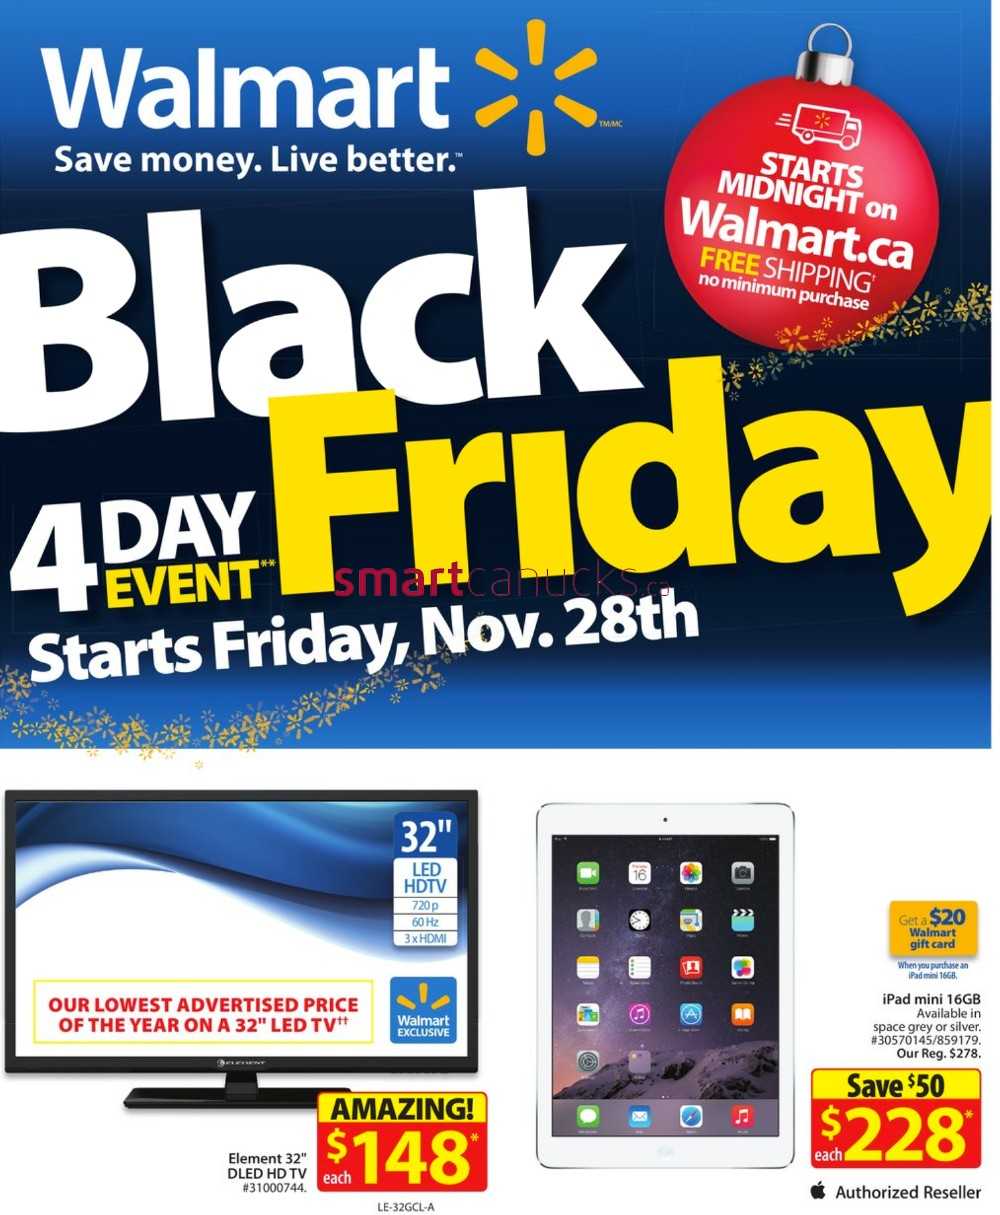 Walmart Canada Black Friday Flyer 2014 Sales & Deals (Nov 28 - Dec 1) - When Does Black Friday Deals End 2014